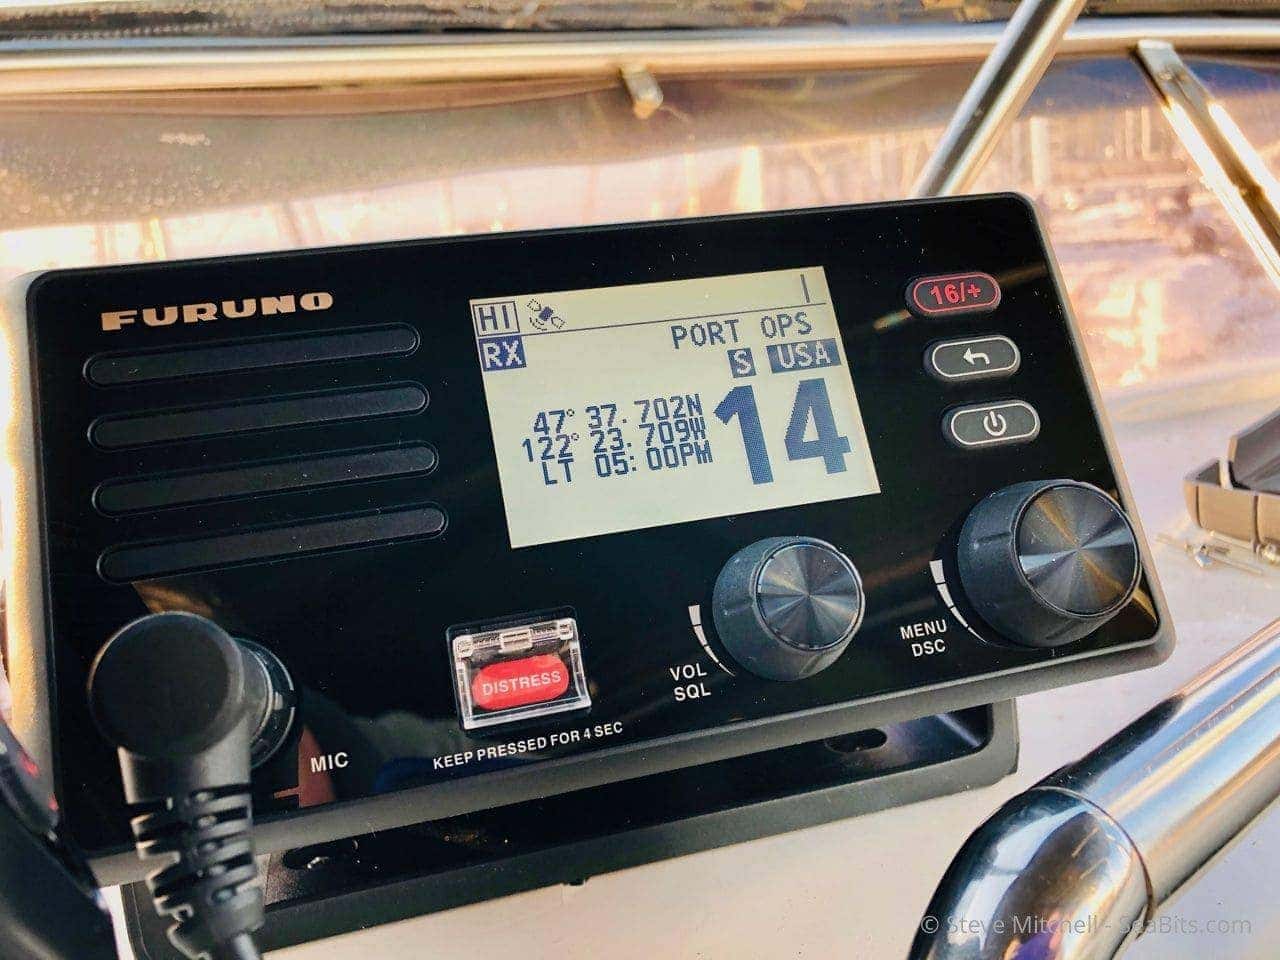 Furuno FM-4800 VHF Radio